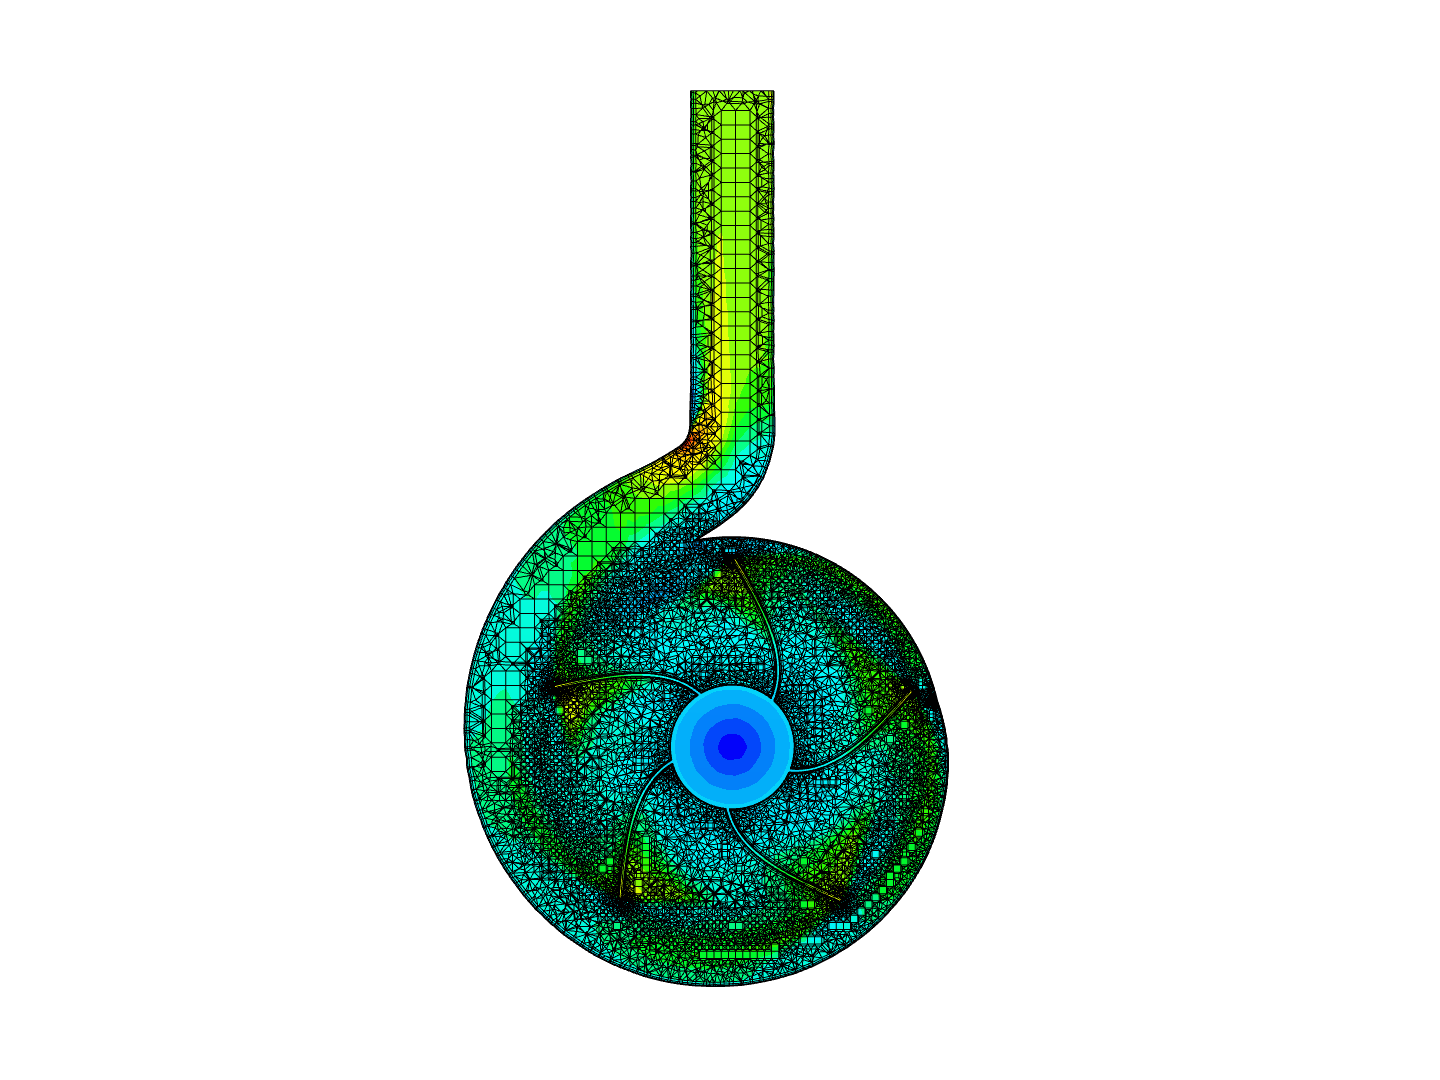 centrifugal pump simulation corsera image